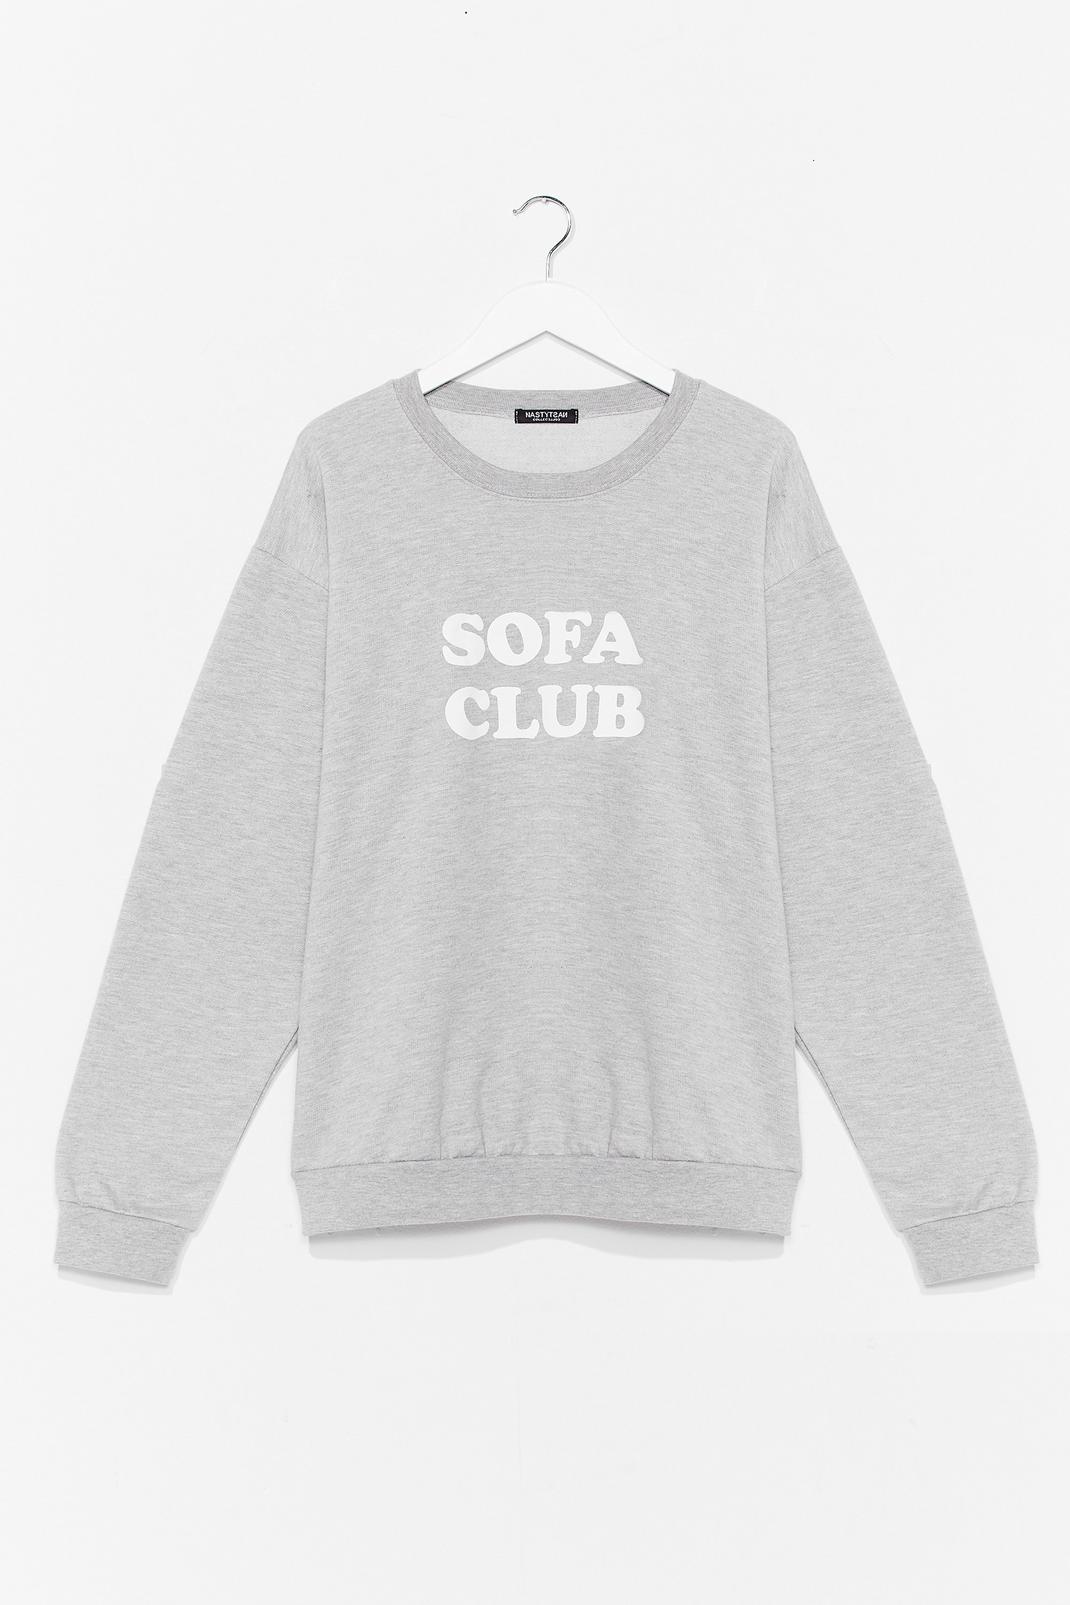 Sofa Club Sweatshirt image number 1